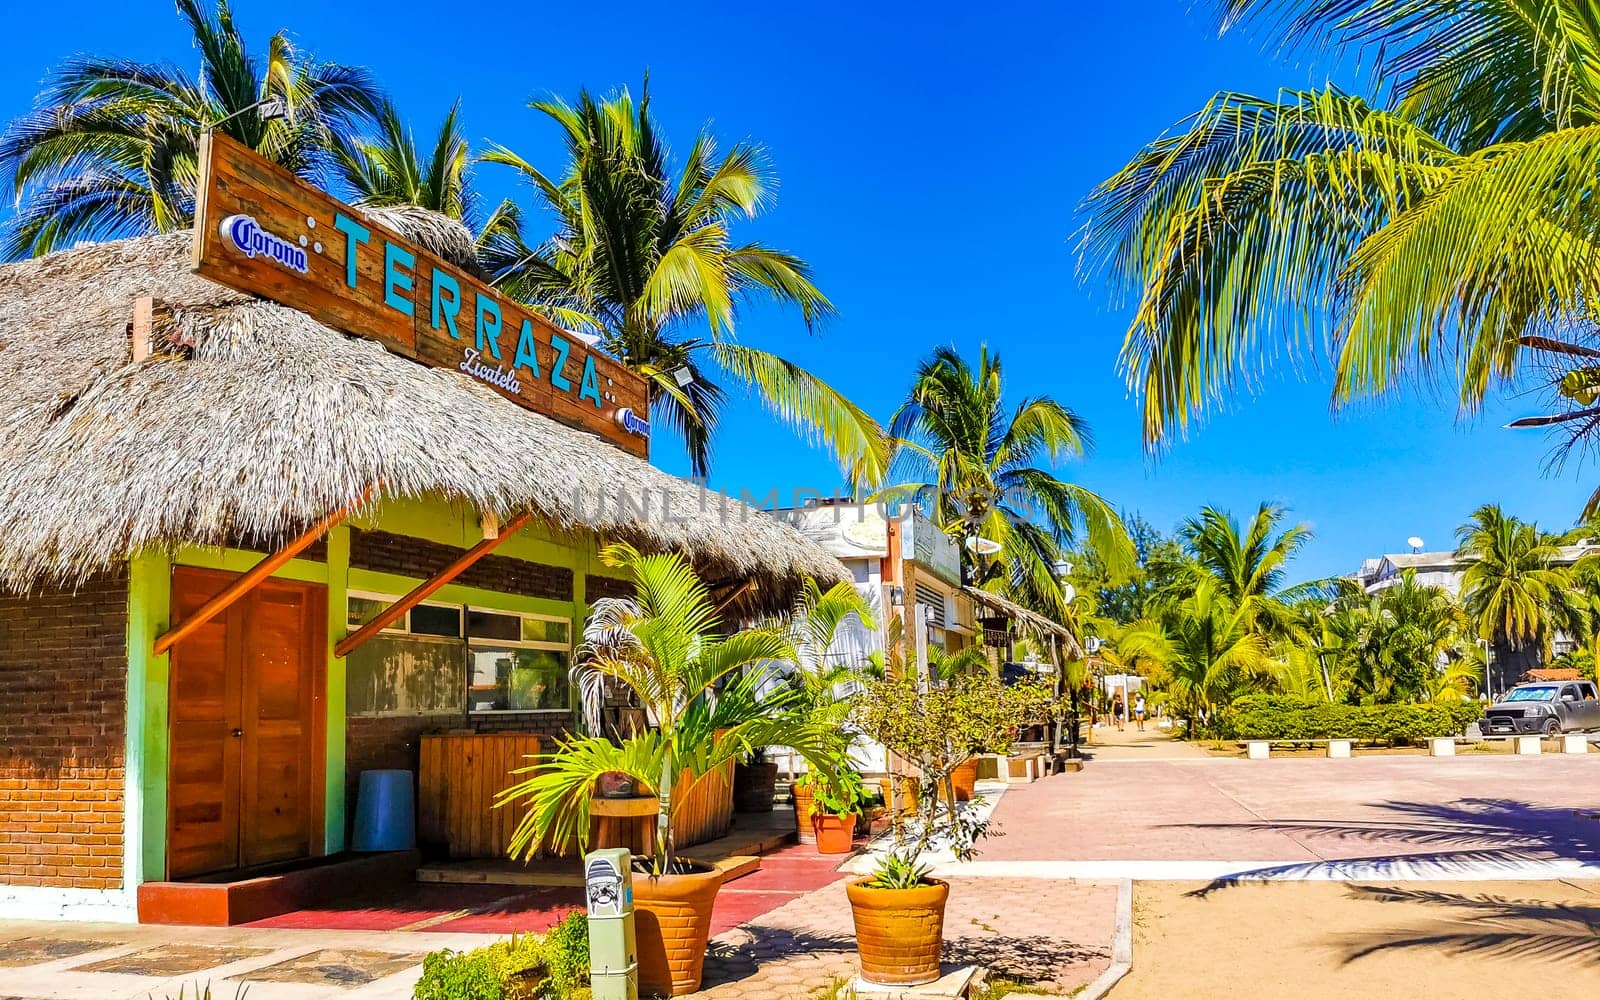 Restaurant restaurants bar bars shops hotels palms palm trees and promenades on the beach in Zicatela Puerto Escondido Oaxaca Mexico.